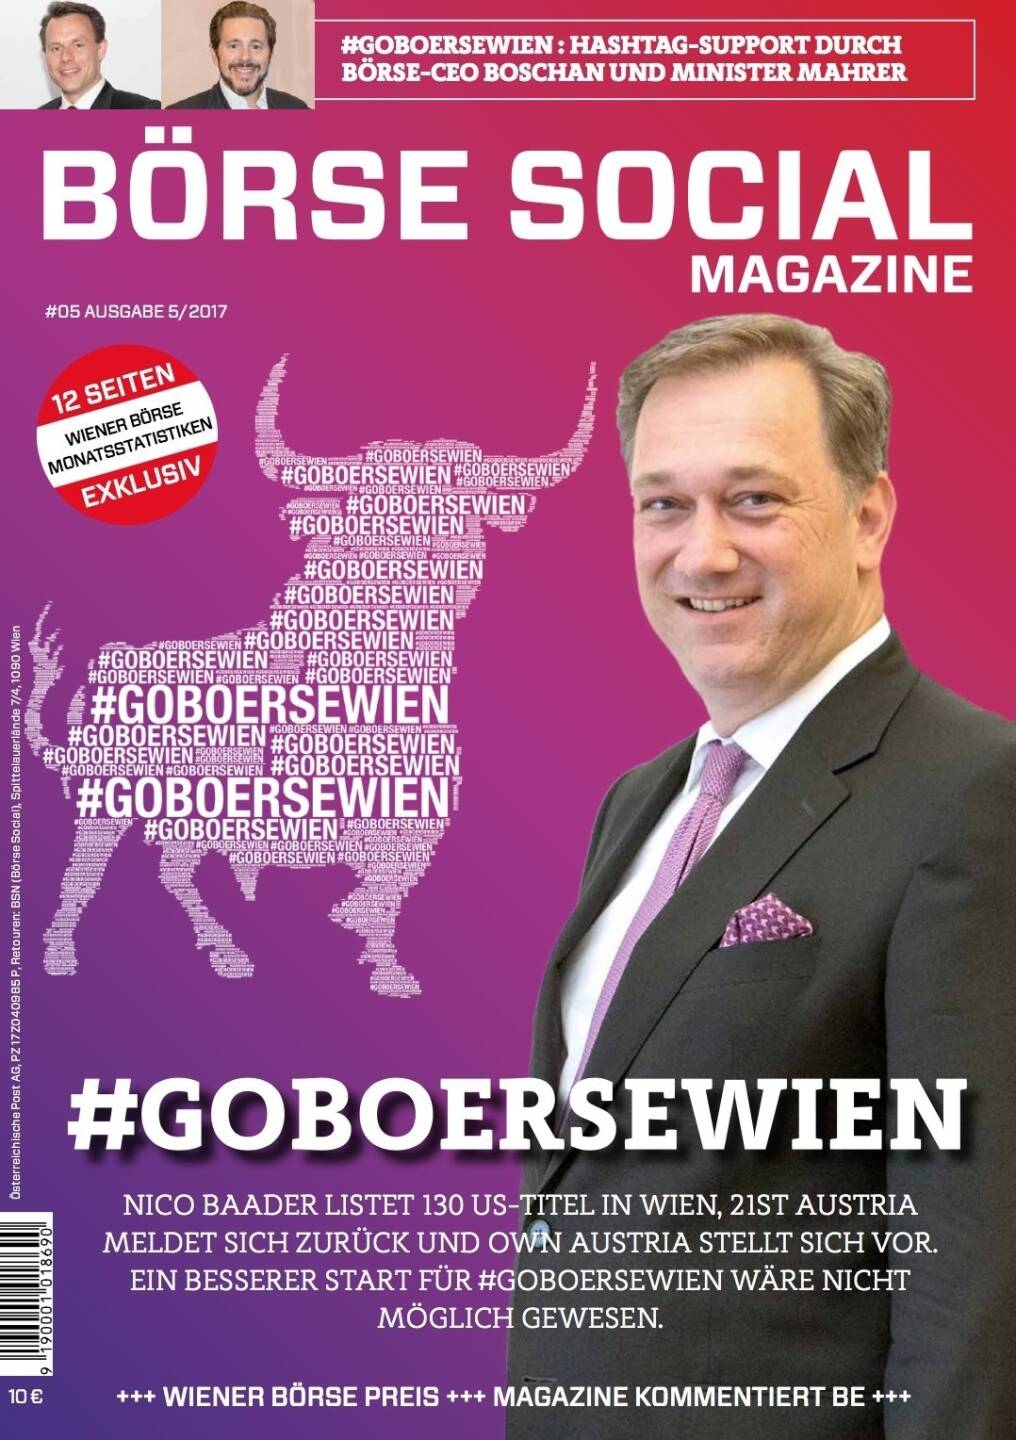 Börse Social Magazine #5 mit Nico Baader, Baader Bank, am Cover